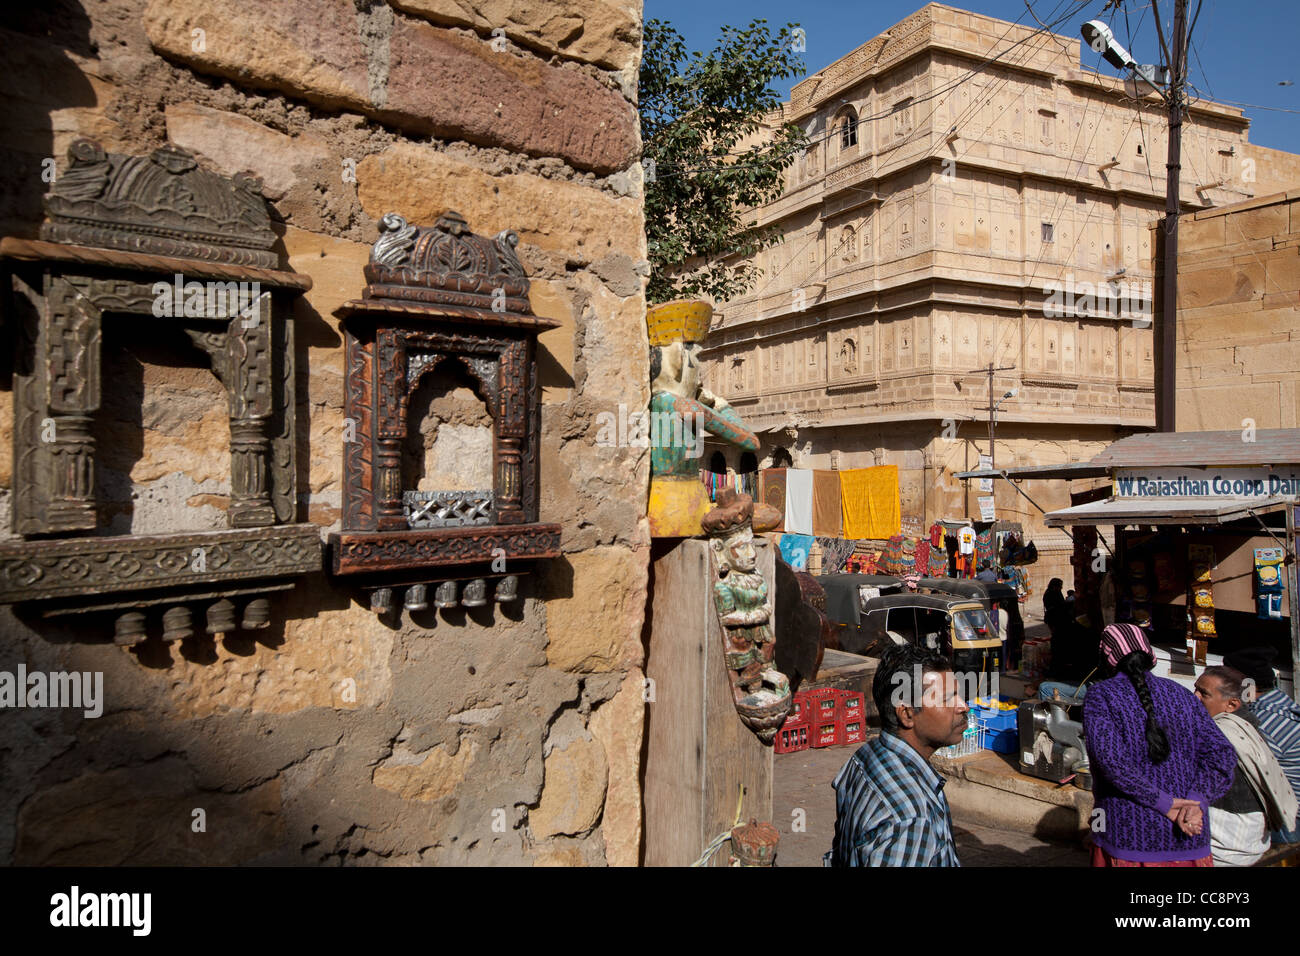 Le Fort Palace et Dashera Chowk, dans Fort de Jaisalmer, dans le Rajasthan, Inde Banque D'Images